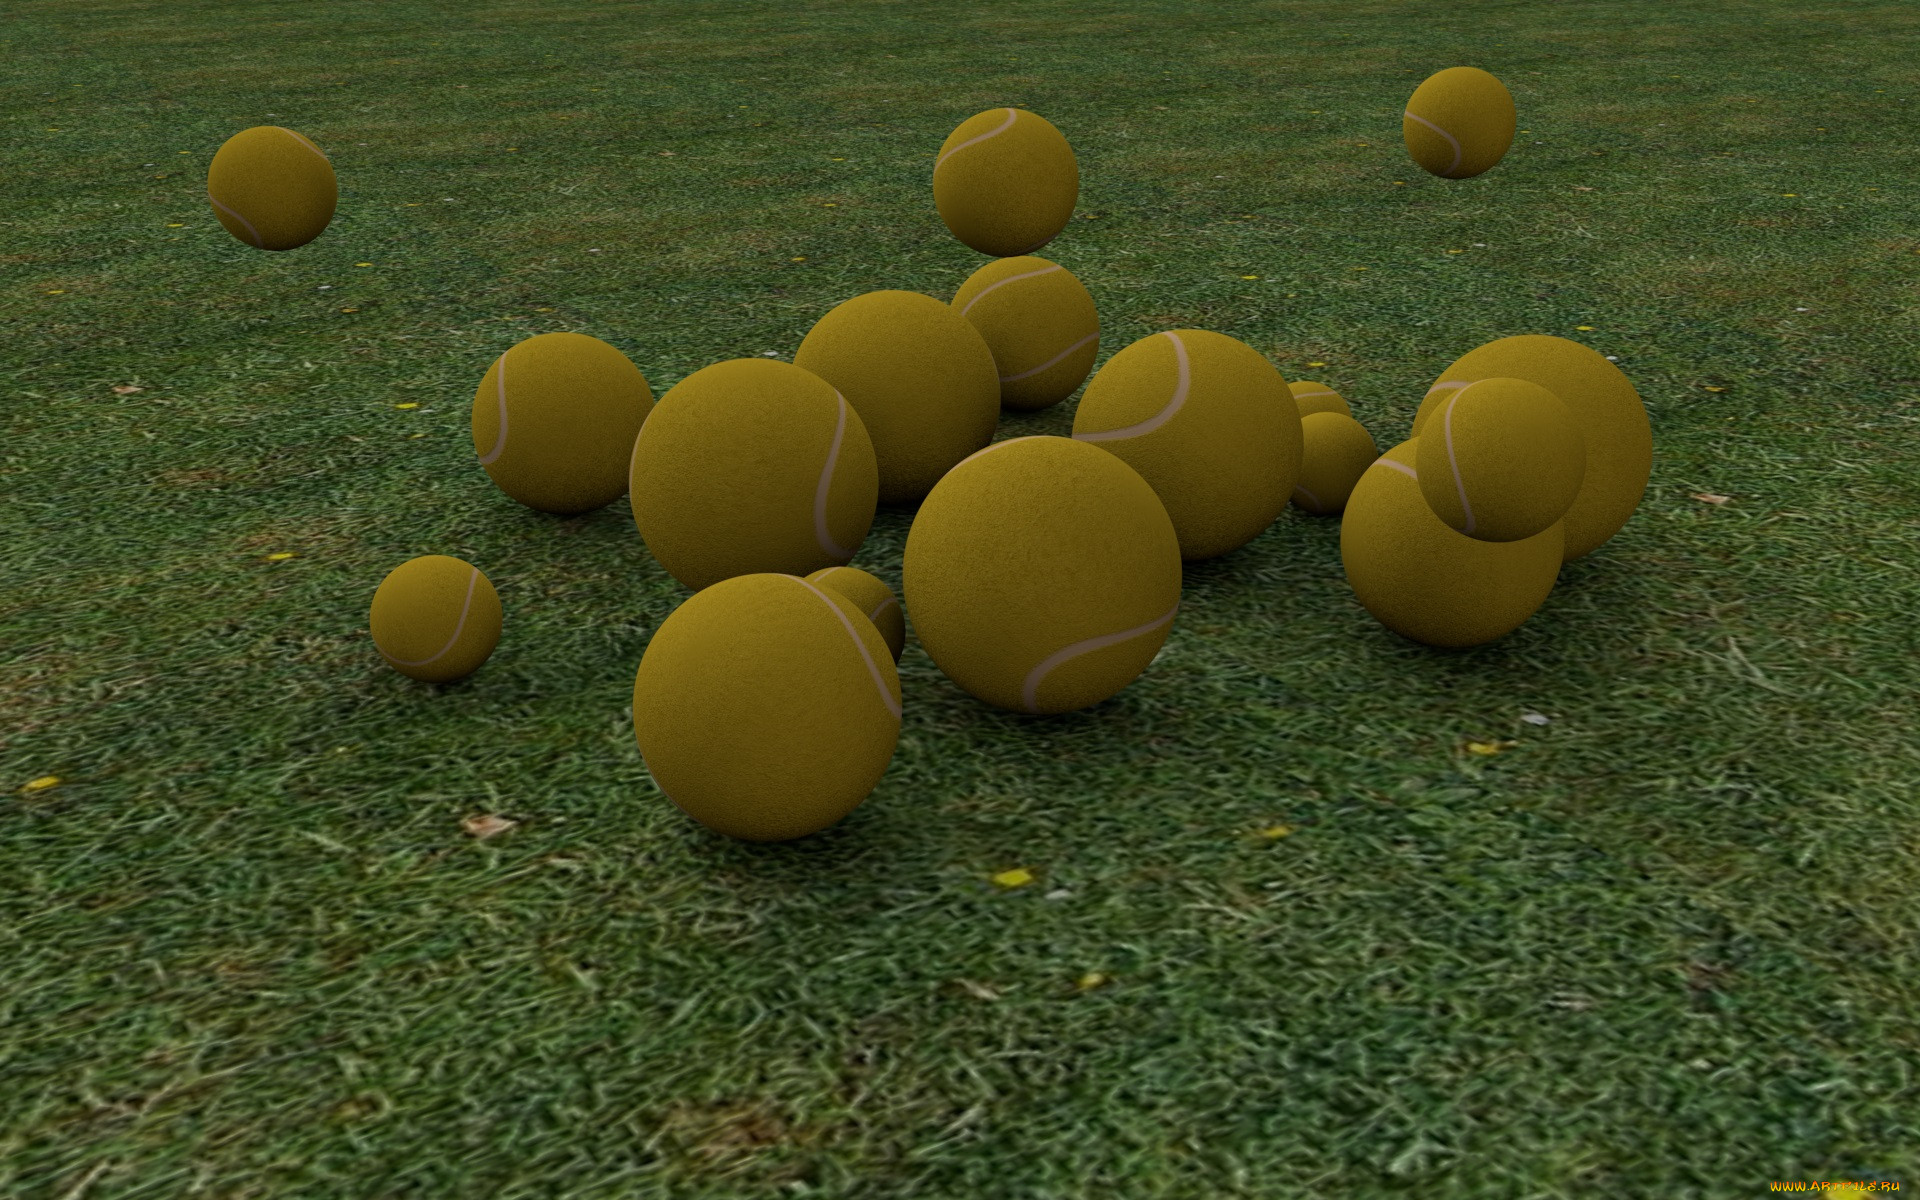 Best ball шары. 3d balls. Три д мяч картинки. Футбол для слепых мяч звенящий шарик. Мячики шарики 22 мм.